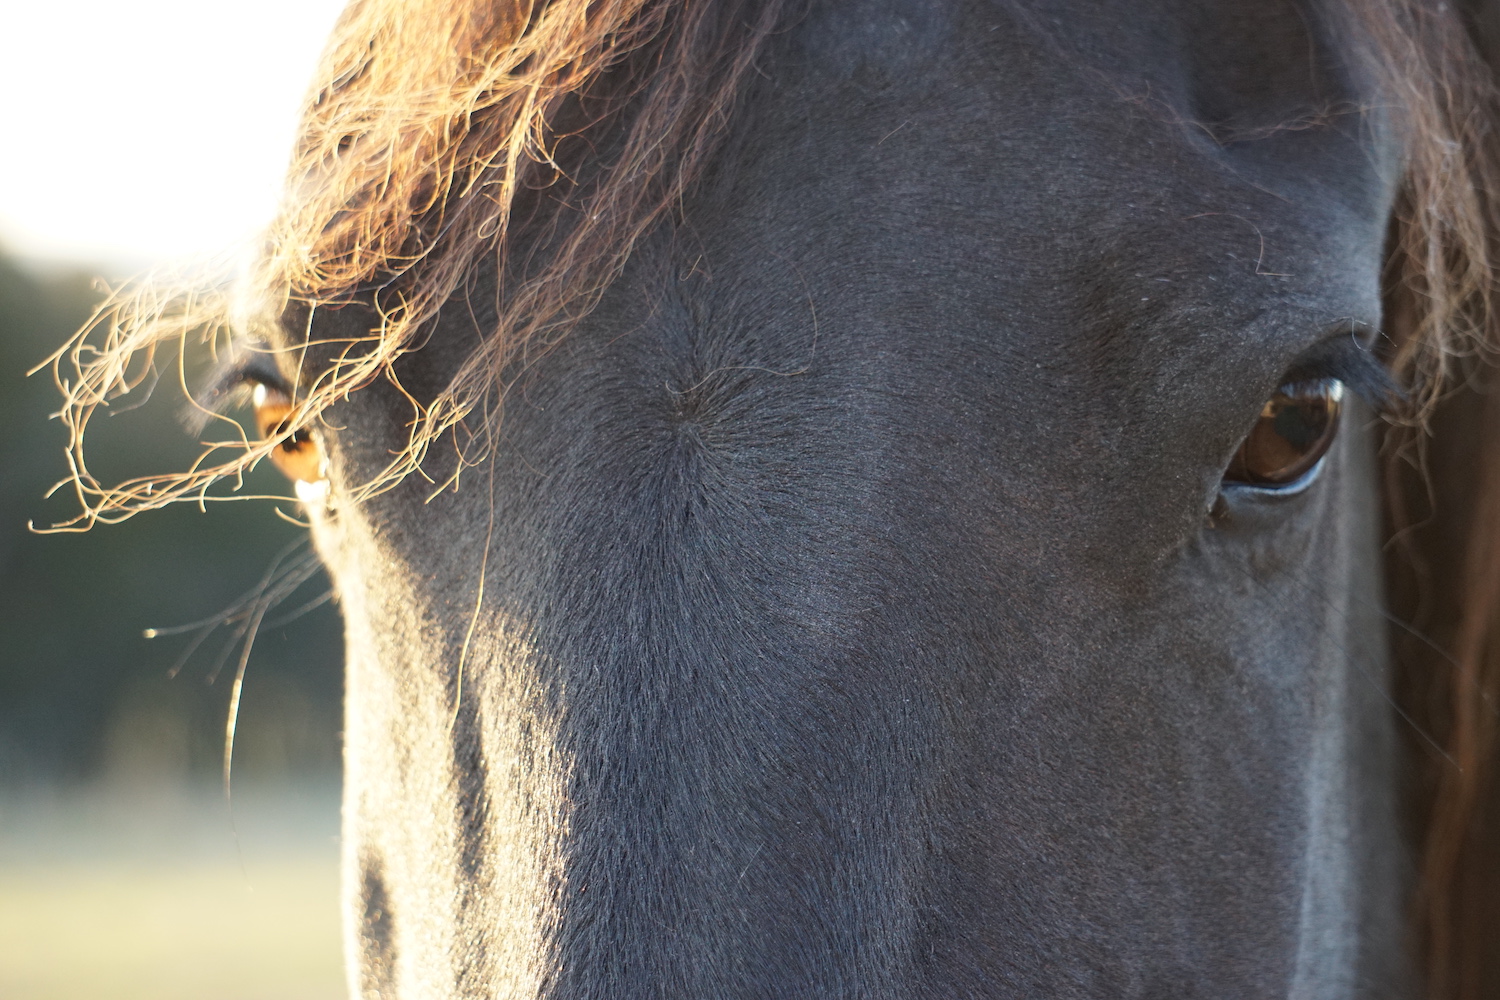 Kelsey horses head close up